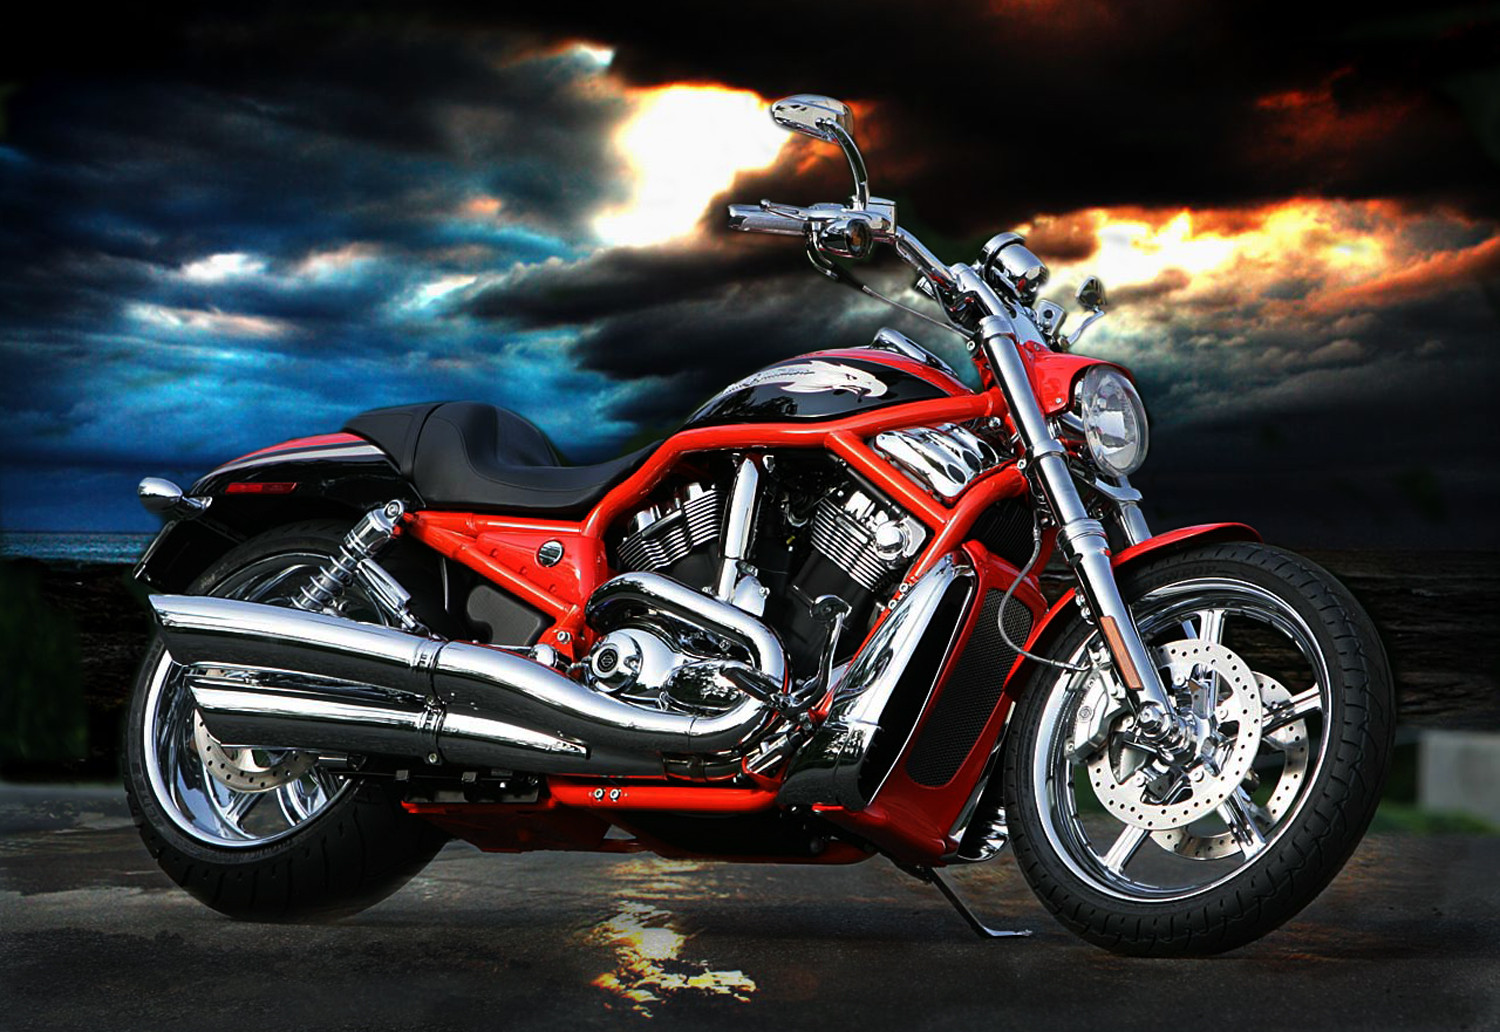 Harley Davidson Full HD Wallpaper Free download